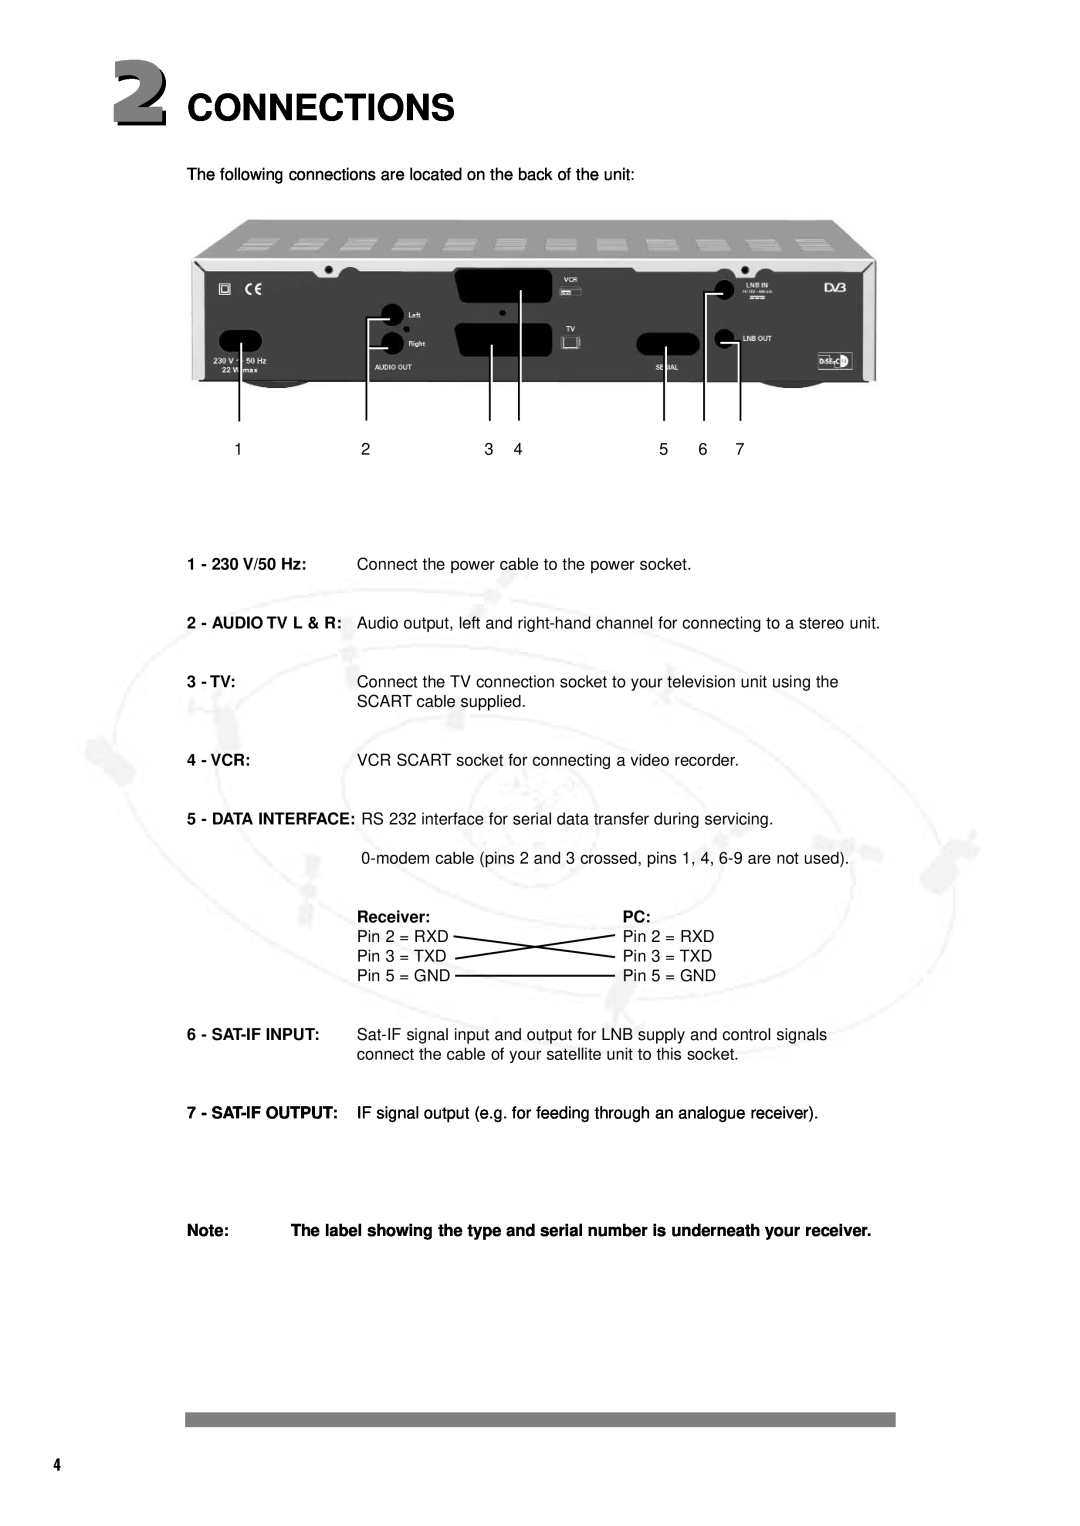 Philips DSR 1000, IT-DSR1000/S manual Connections, 230 V/50 Hz, Audio Tv L & R, Receiver, Sat-If Input, Sat-If Output 